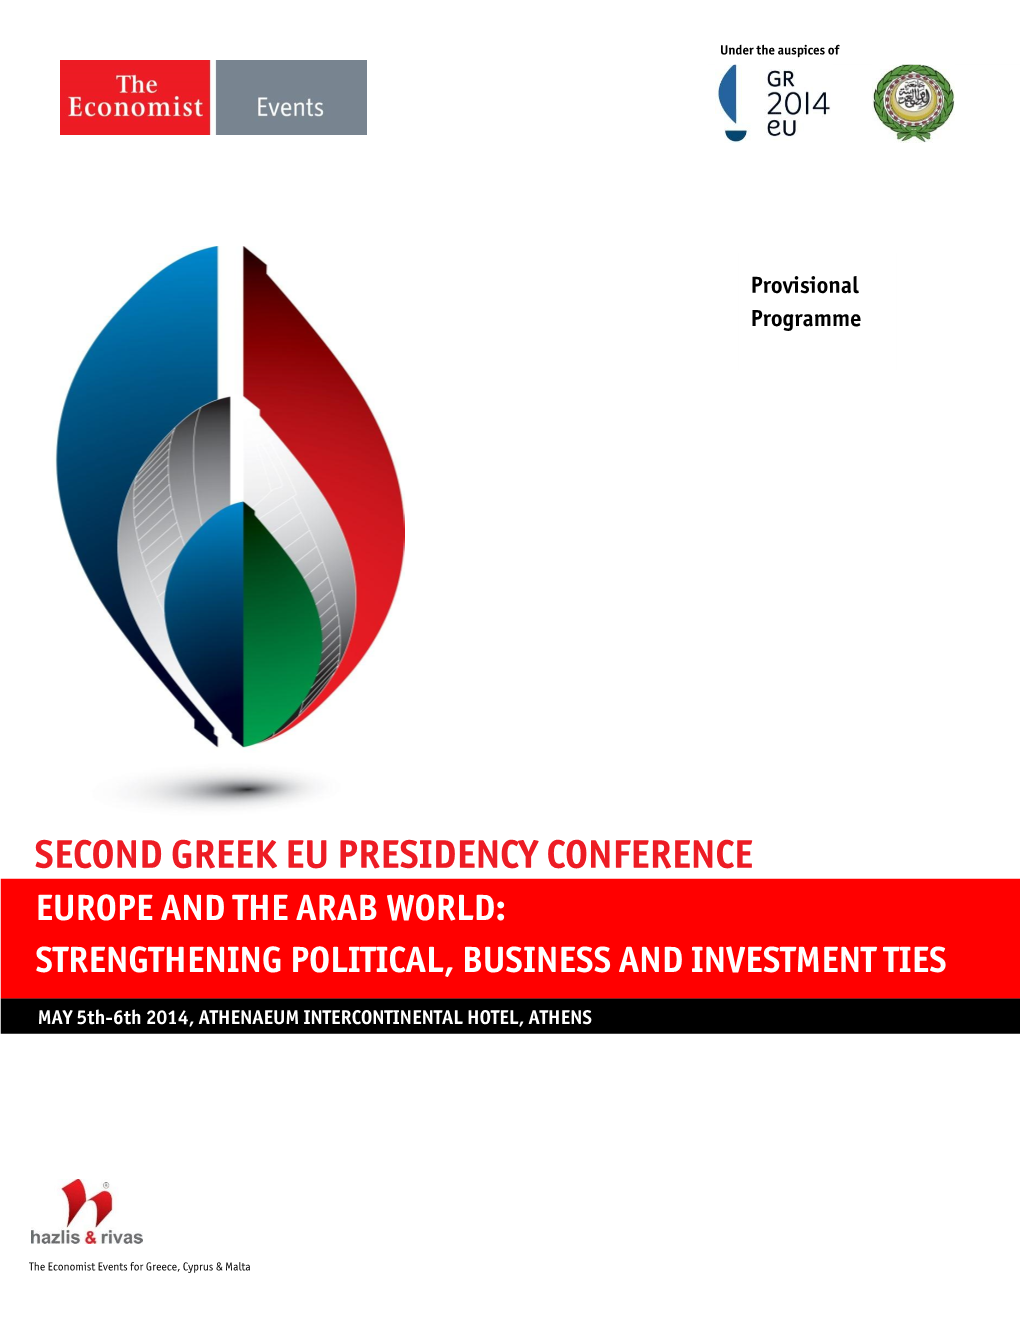 Second Greek Eu Presidency Conference